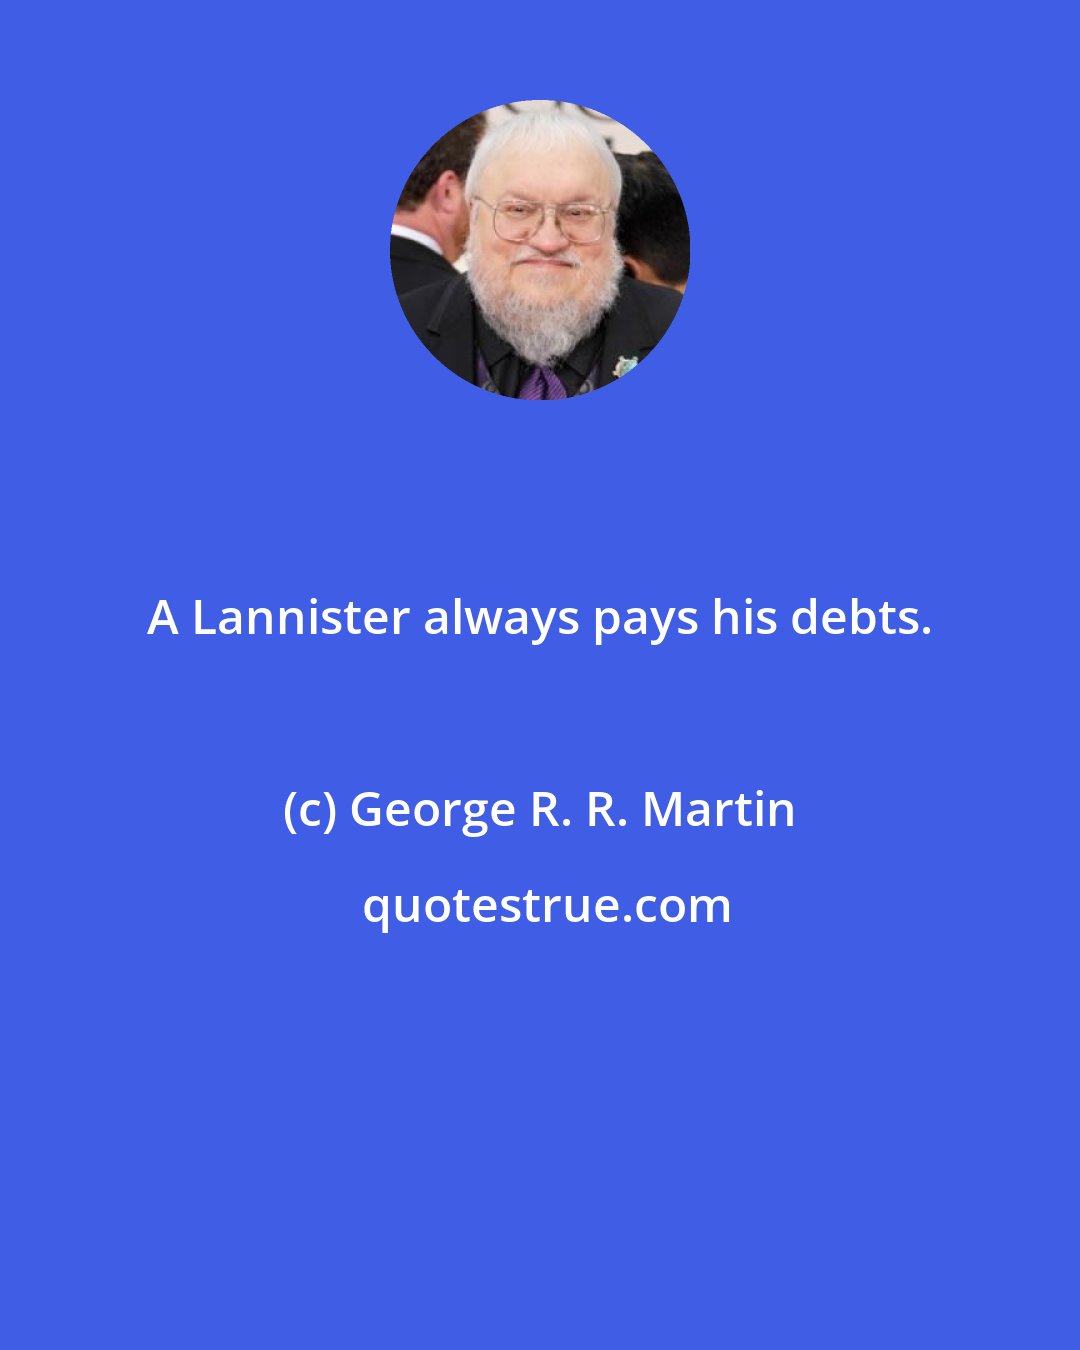 George R. R. Martin: A Lannister always pays his debts.